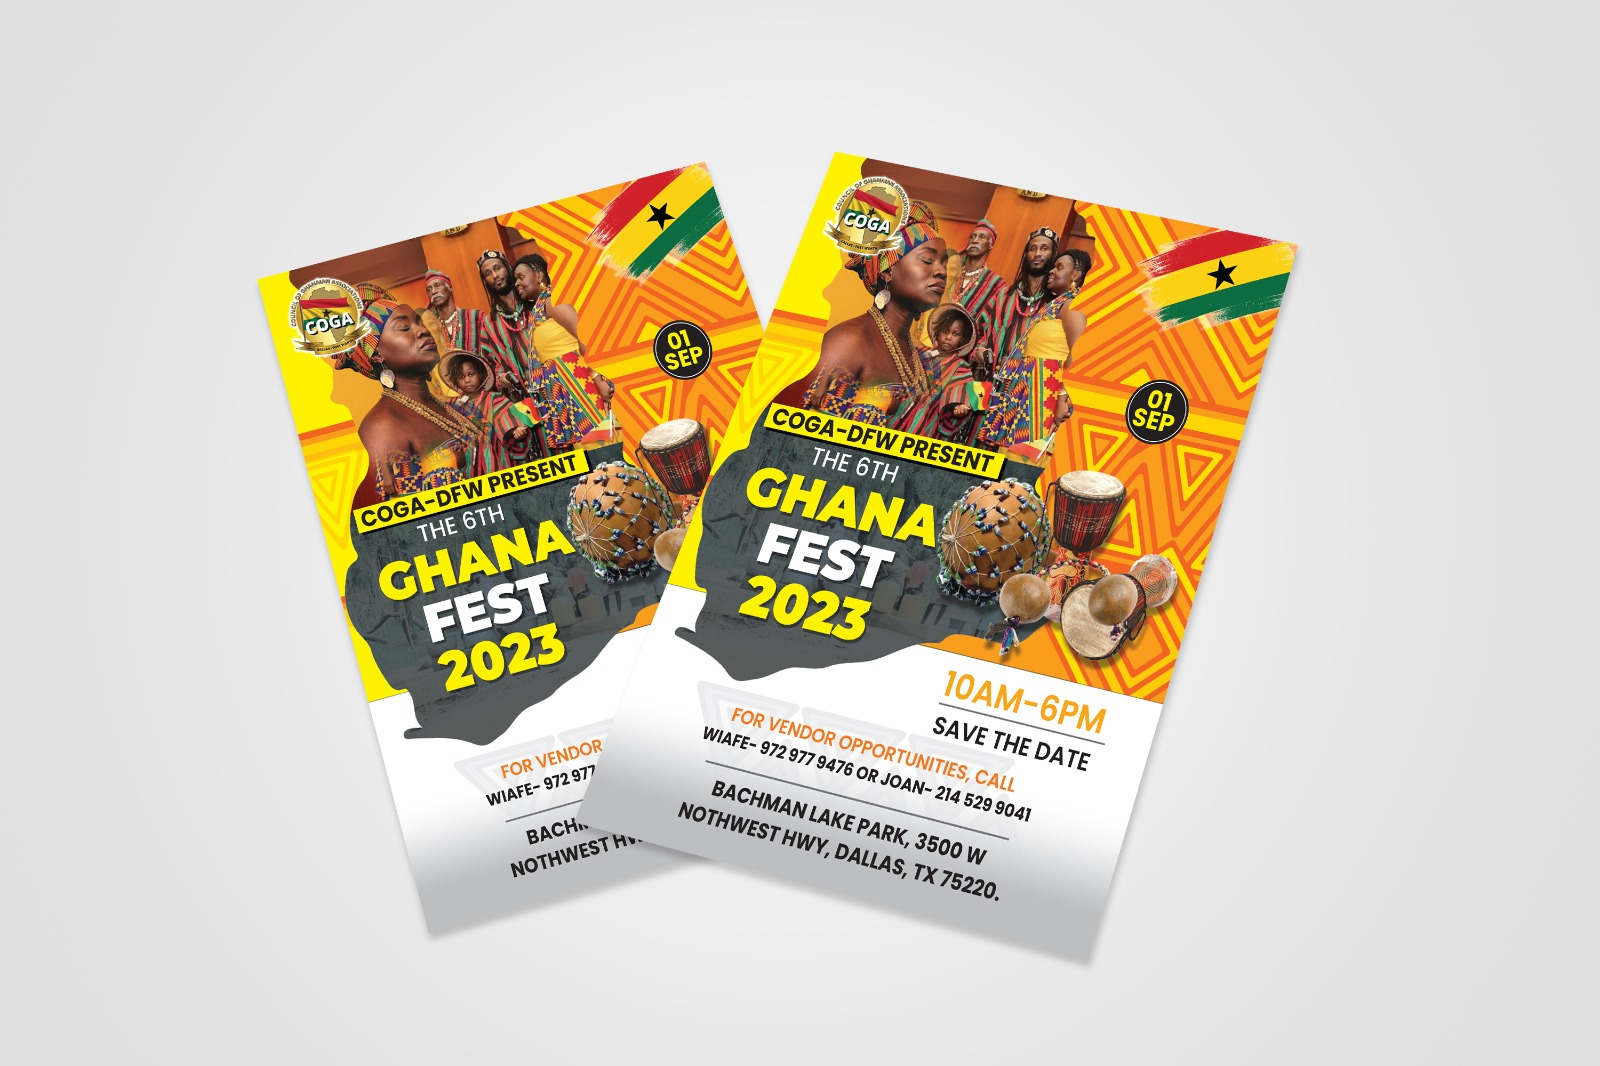 Ghana Fest flyer design by Touhid on Dribbble